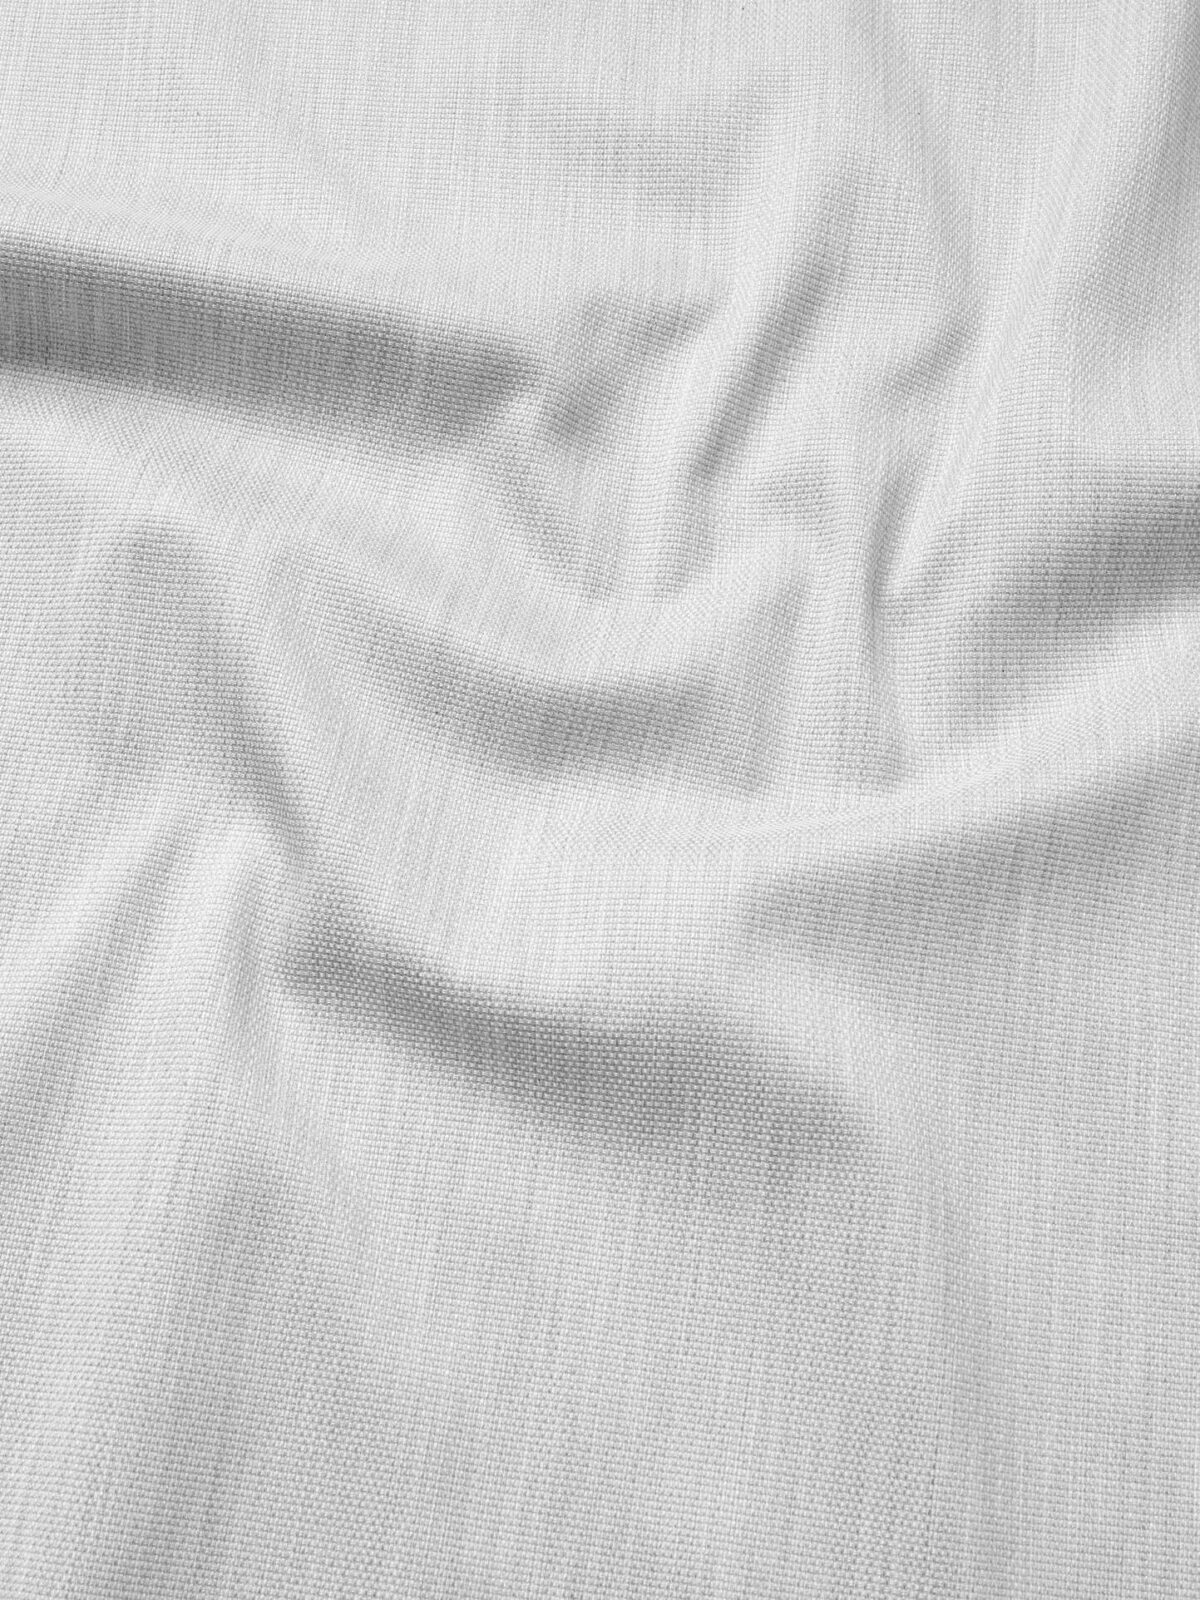 Thomas Mason Light Grey Textured Pique Shirts by Proper Cloth